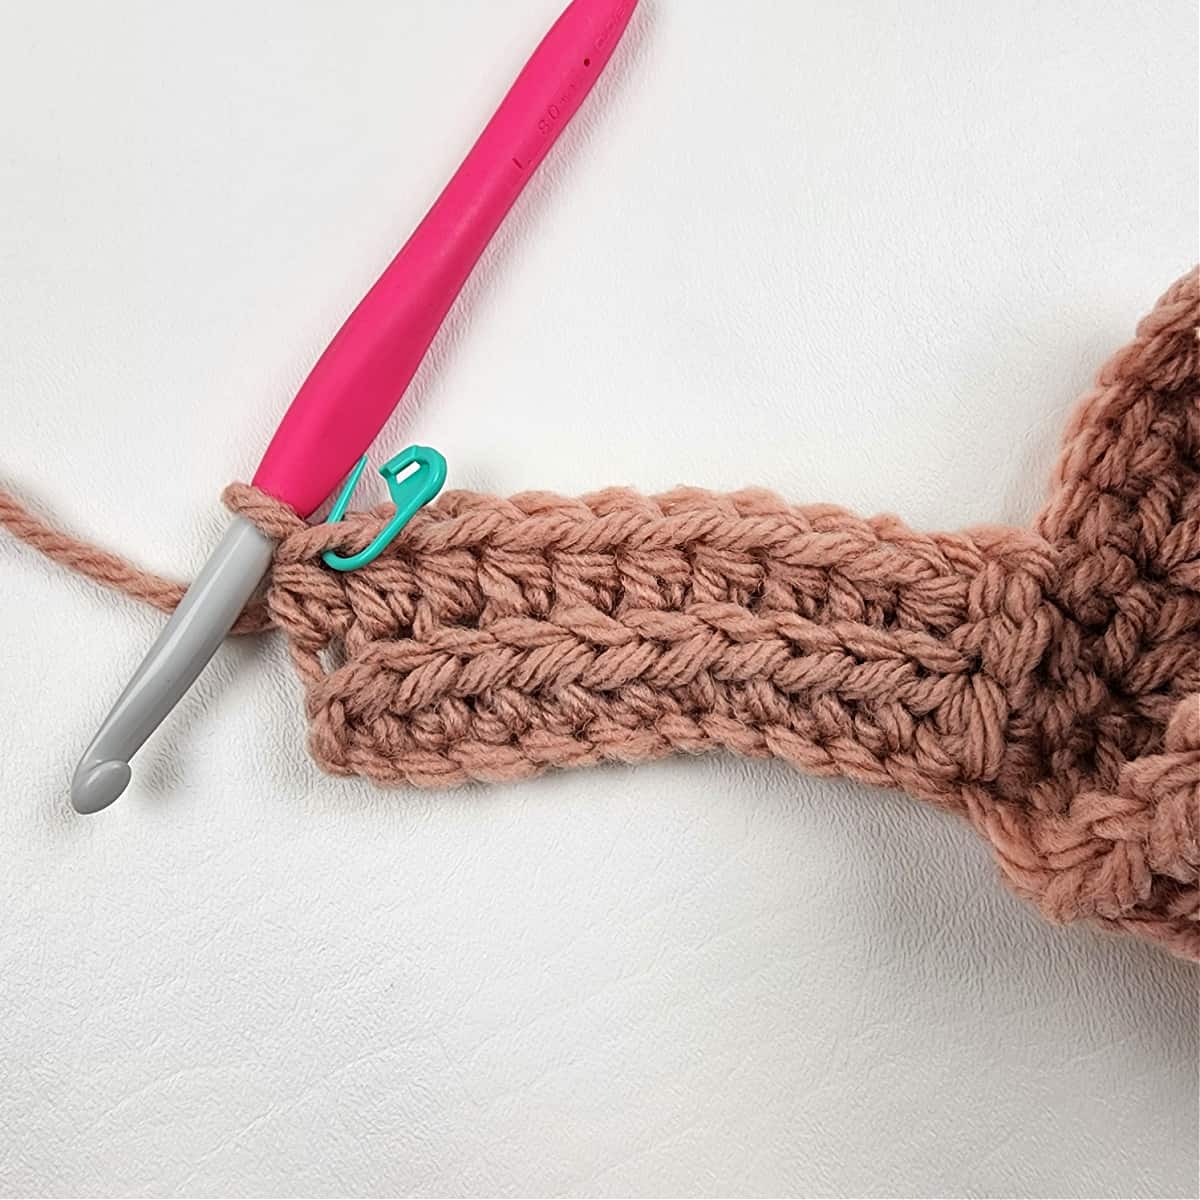 Crochet ribbed cuff photo tutorial.